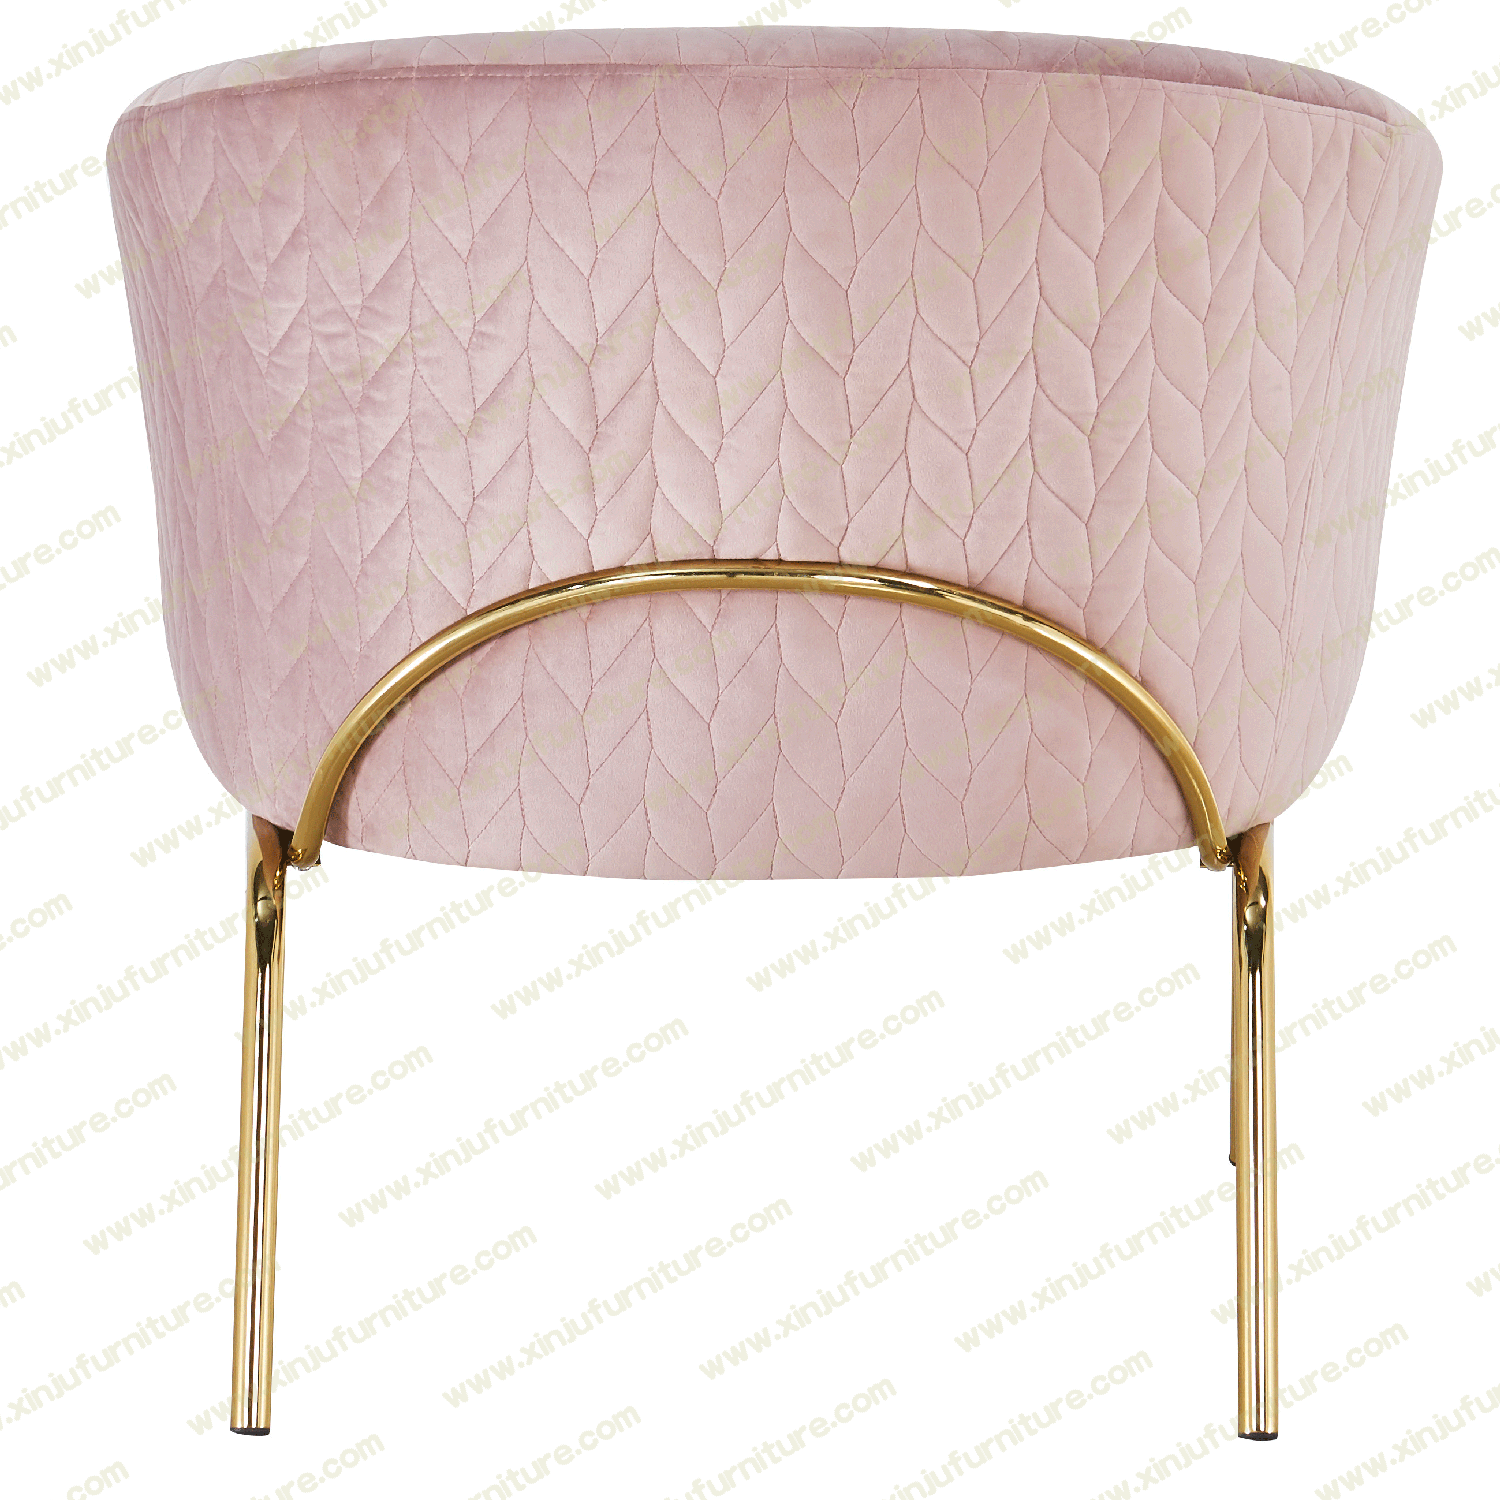 High grade comfortable popular pink bedroom sofa chair